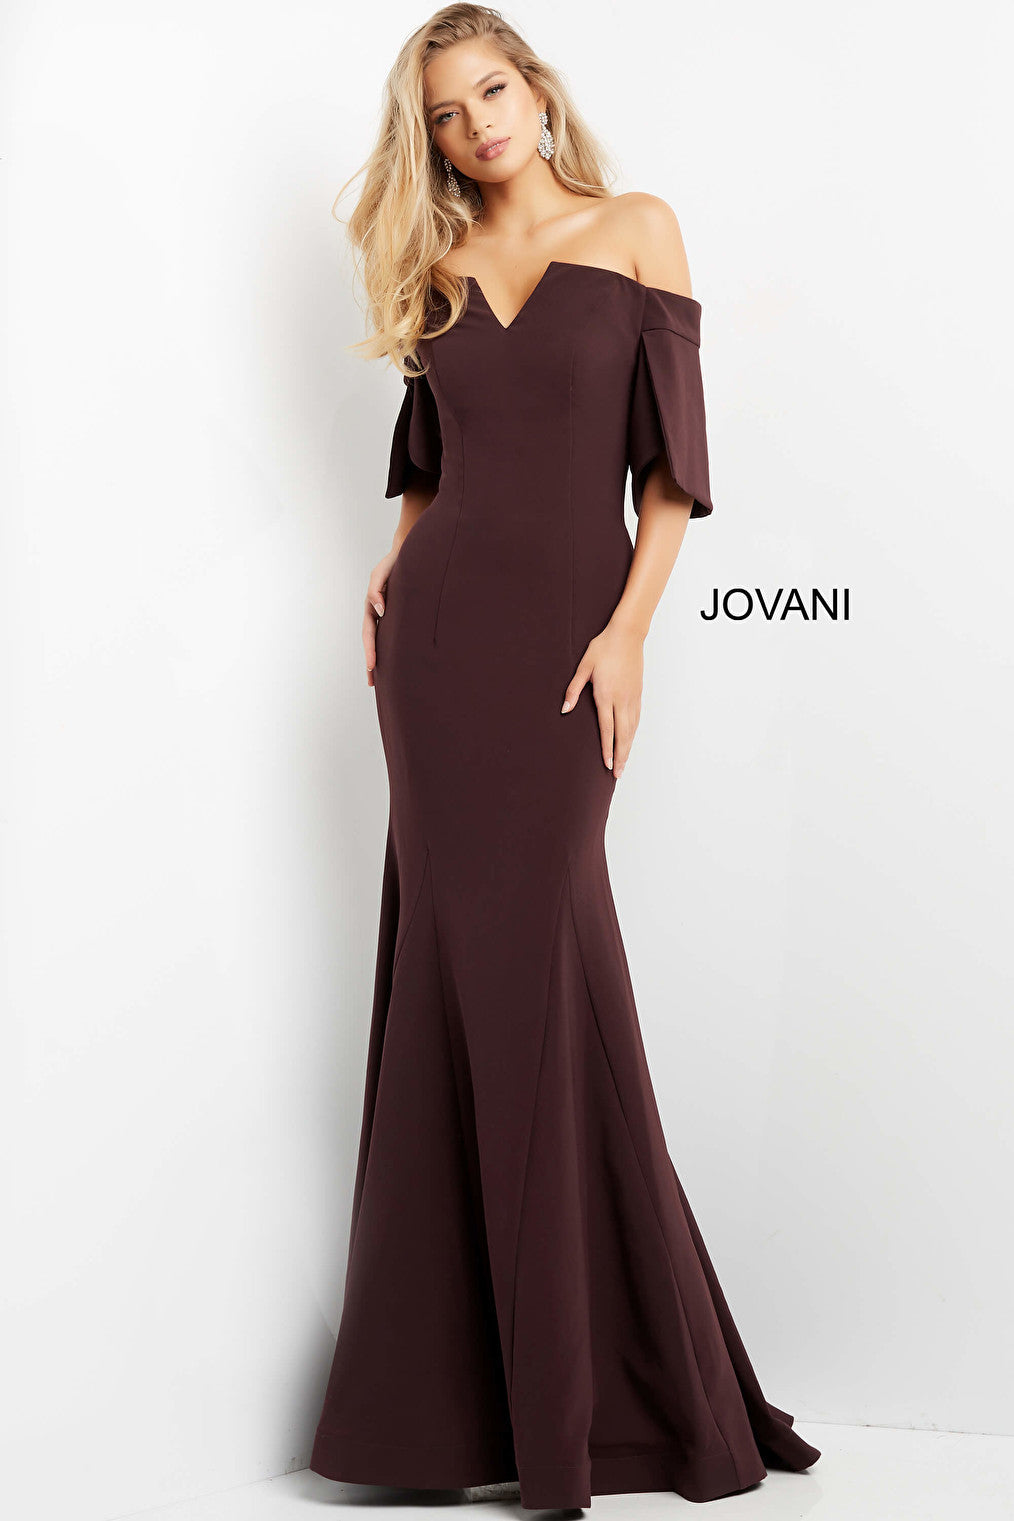 Jovani 04341 Plum Off the Shoulder Sheath Evening Dress